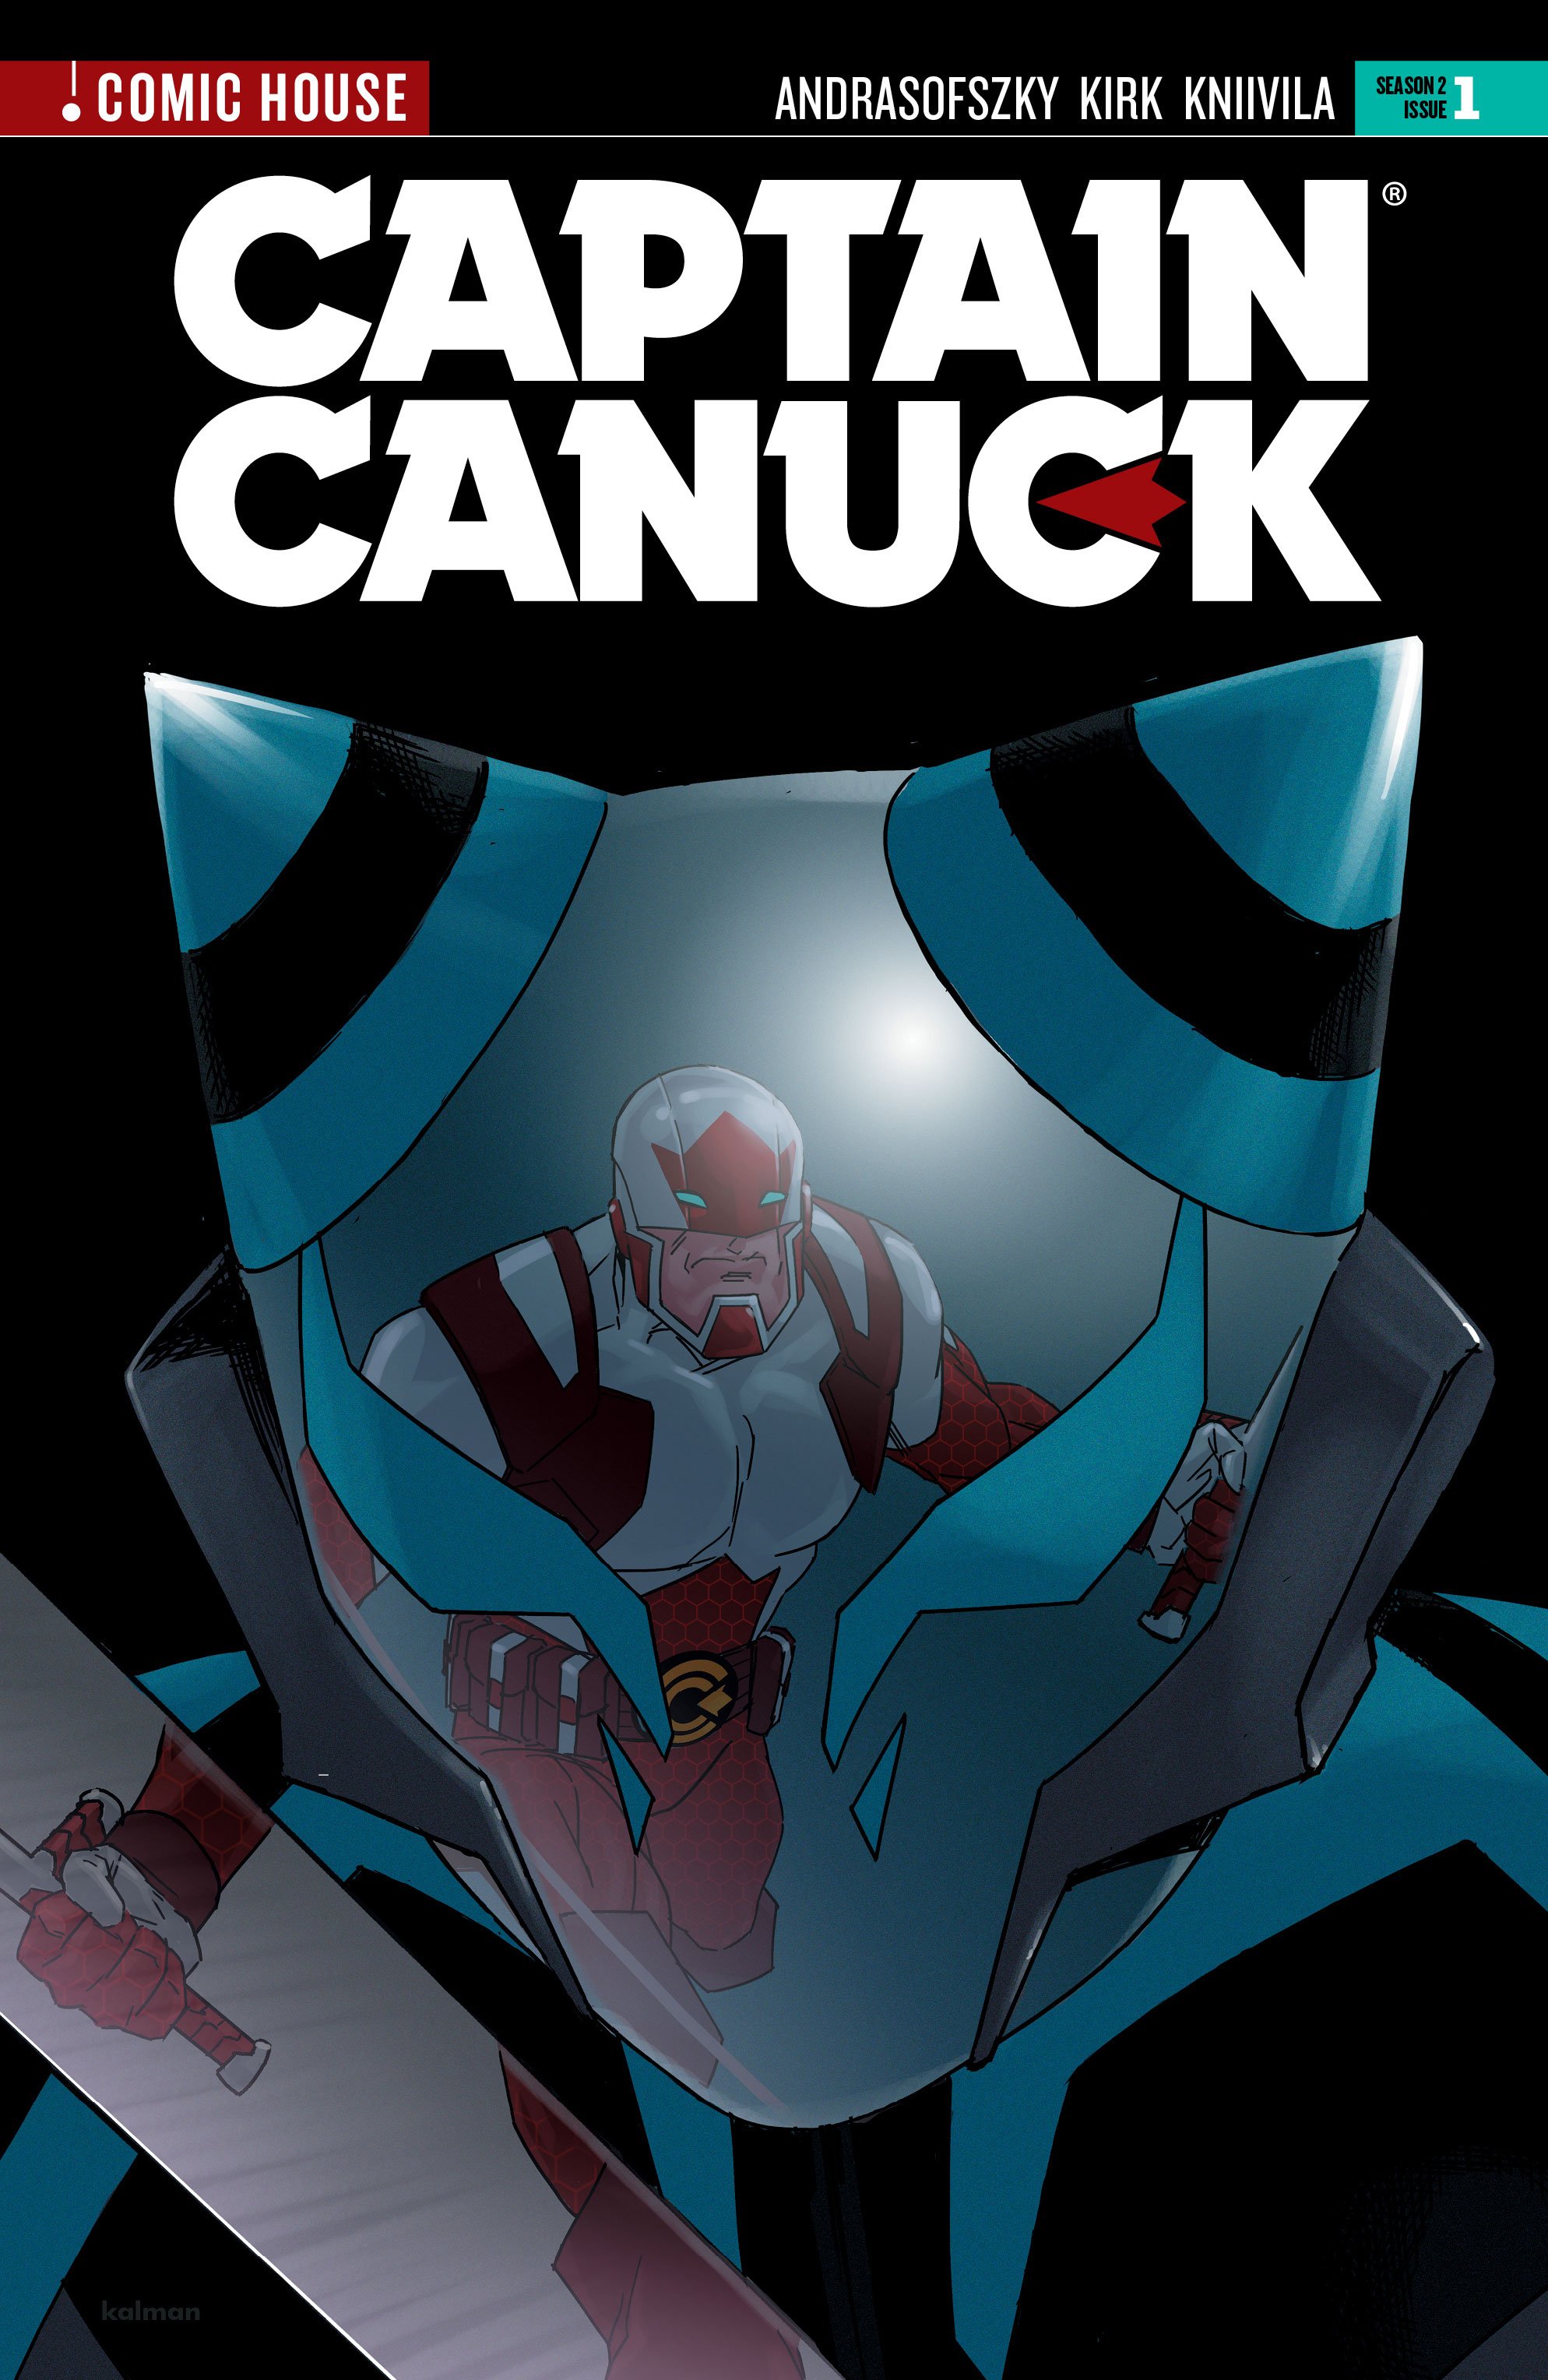 CaptainCanuck_007_S2_Issue1_cover-A.jpg